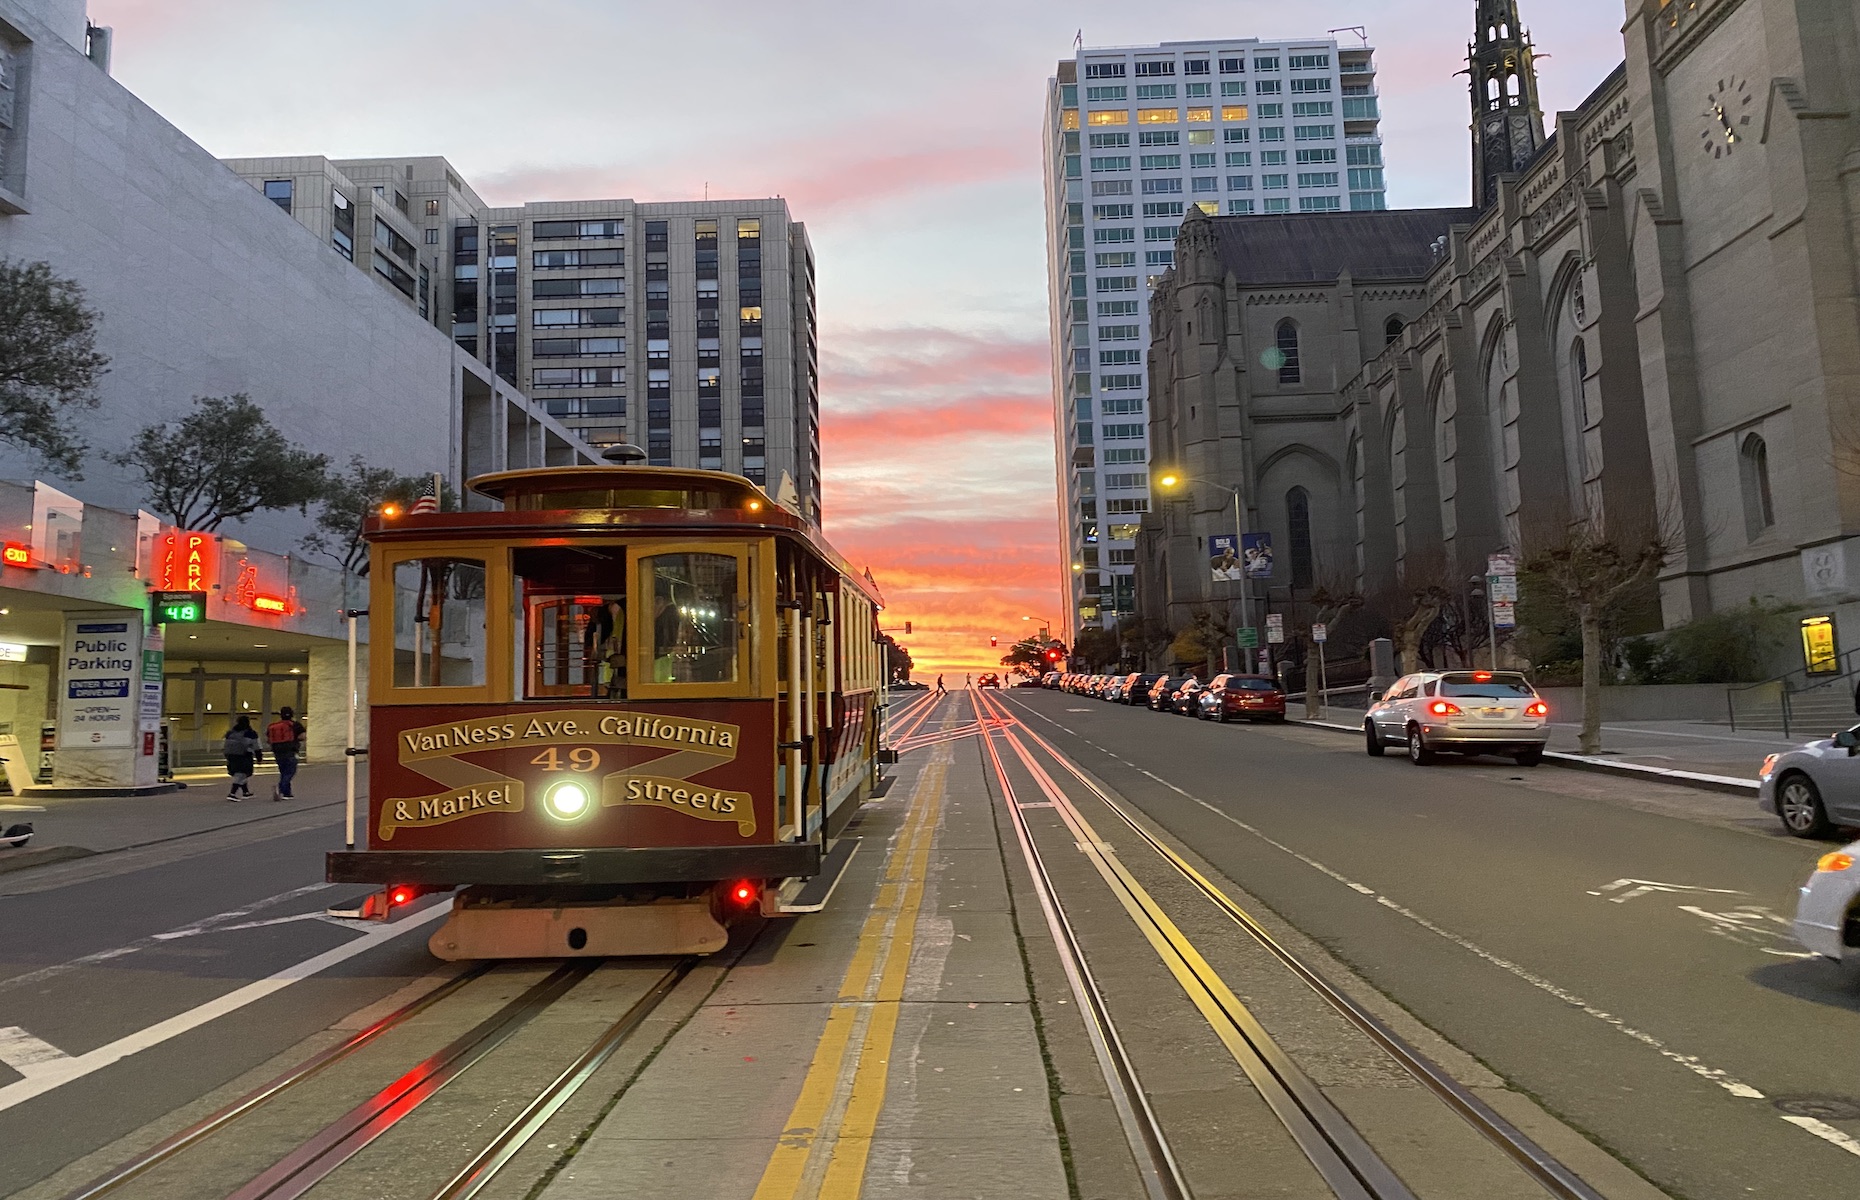 Tram in the evening San Francisco (Image: Tamara Hinson)